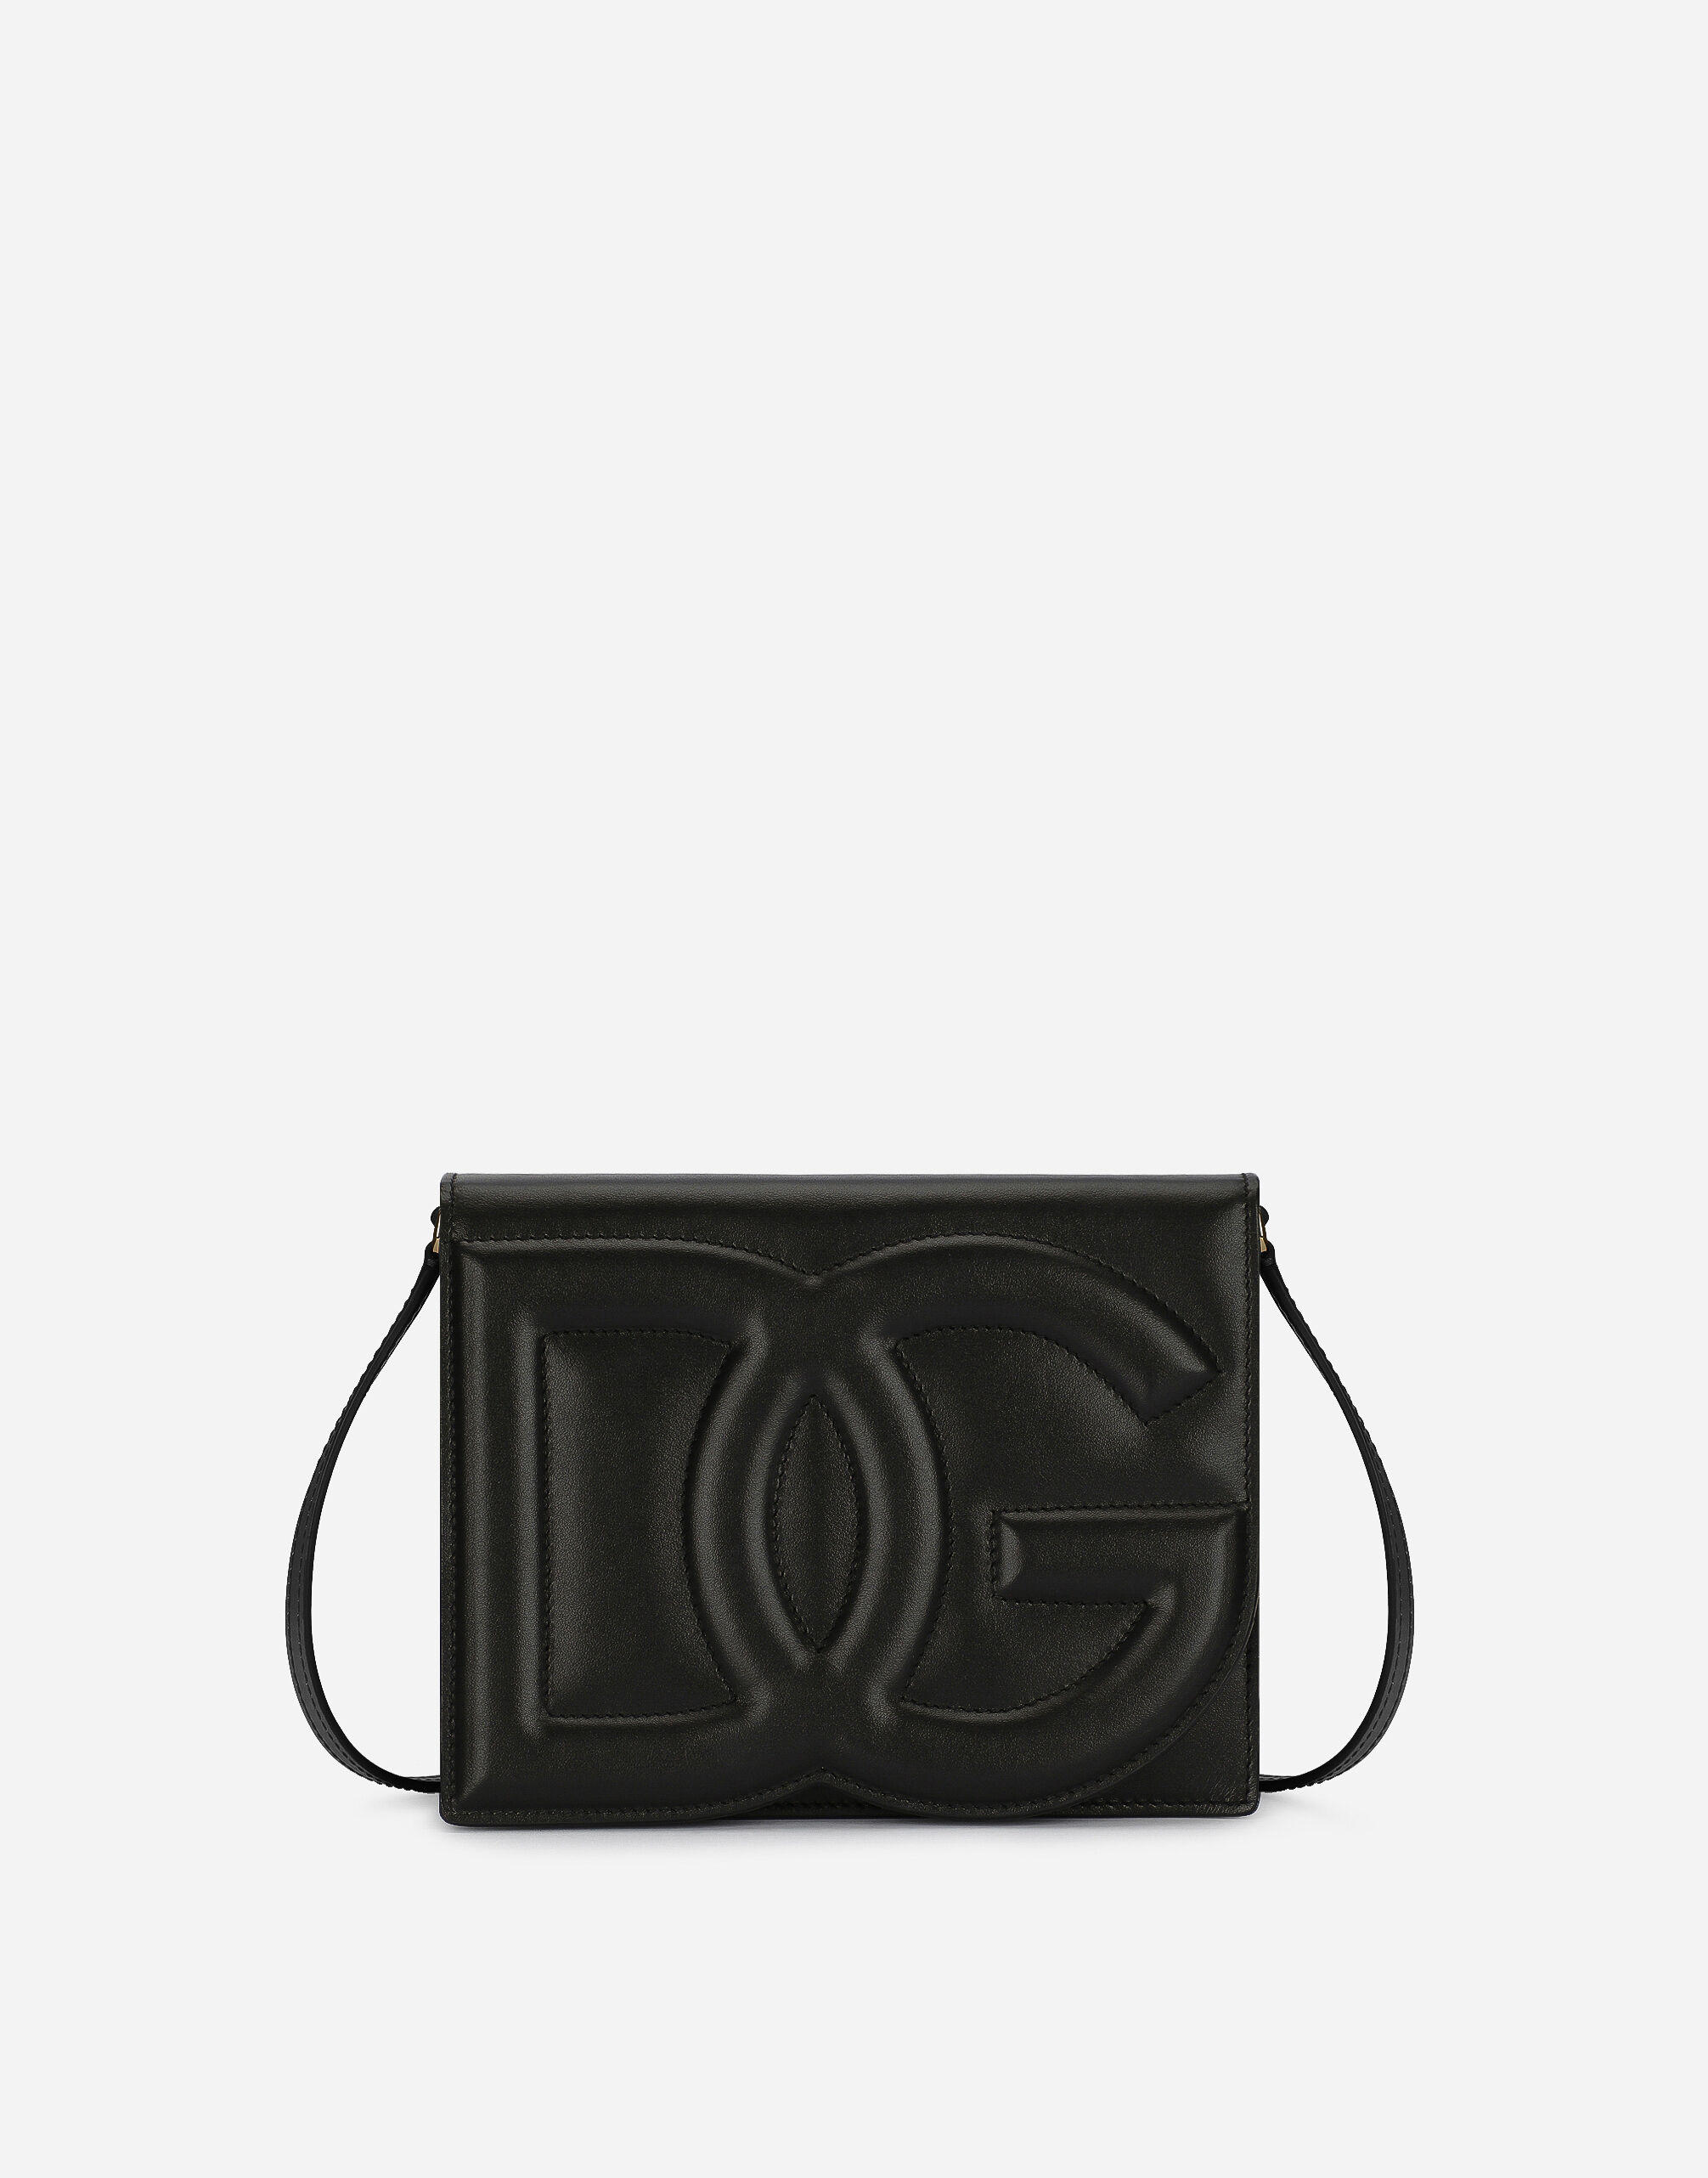 Dolce & Gabbana Calfskin DG Logo Bag crossbody bag Black VG6186VN187